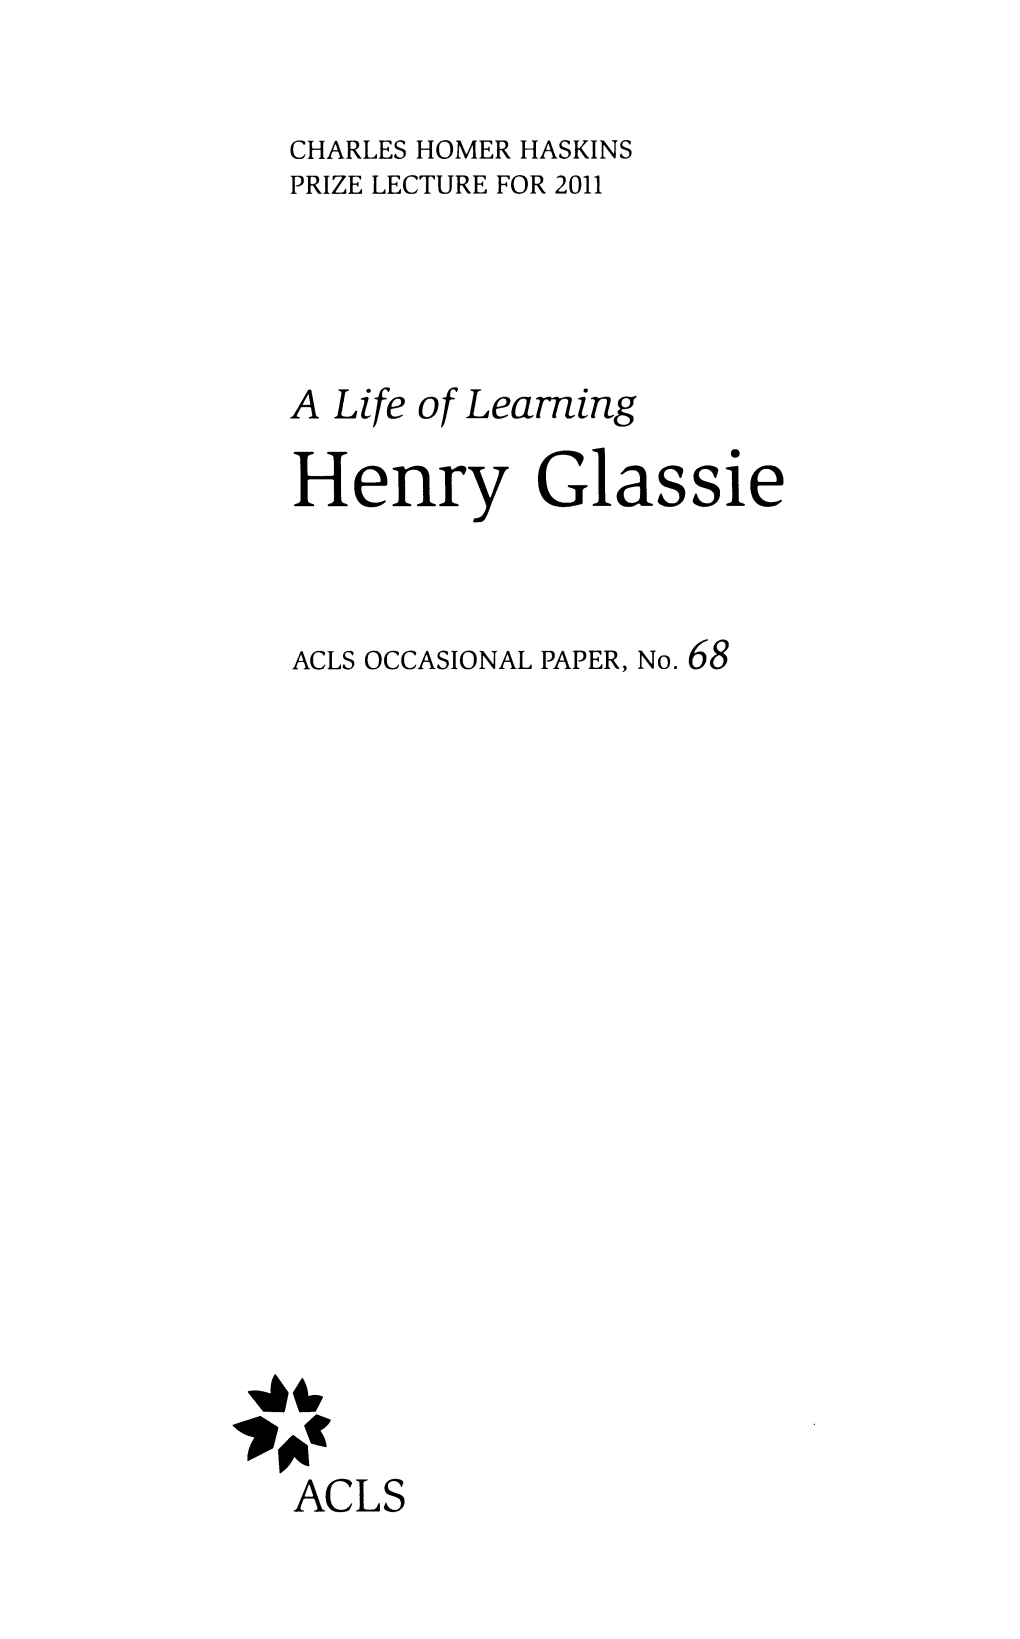 Henry Glassie